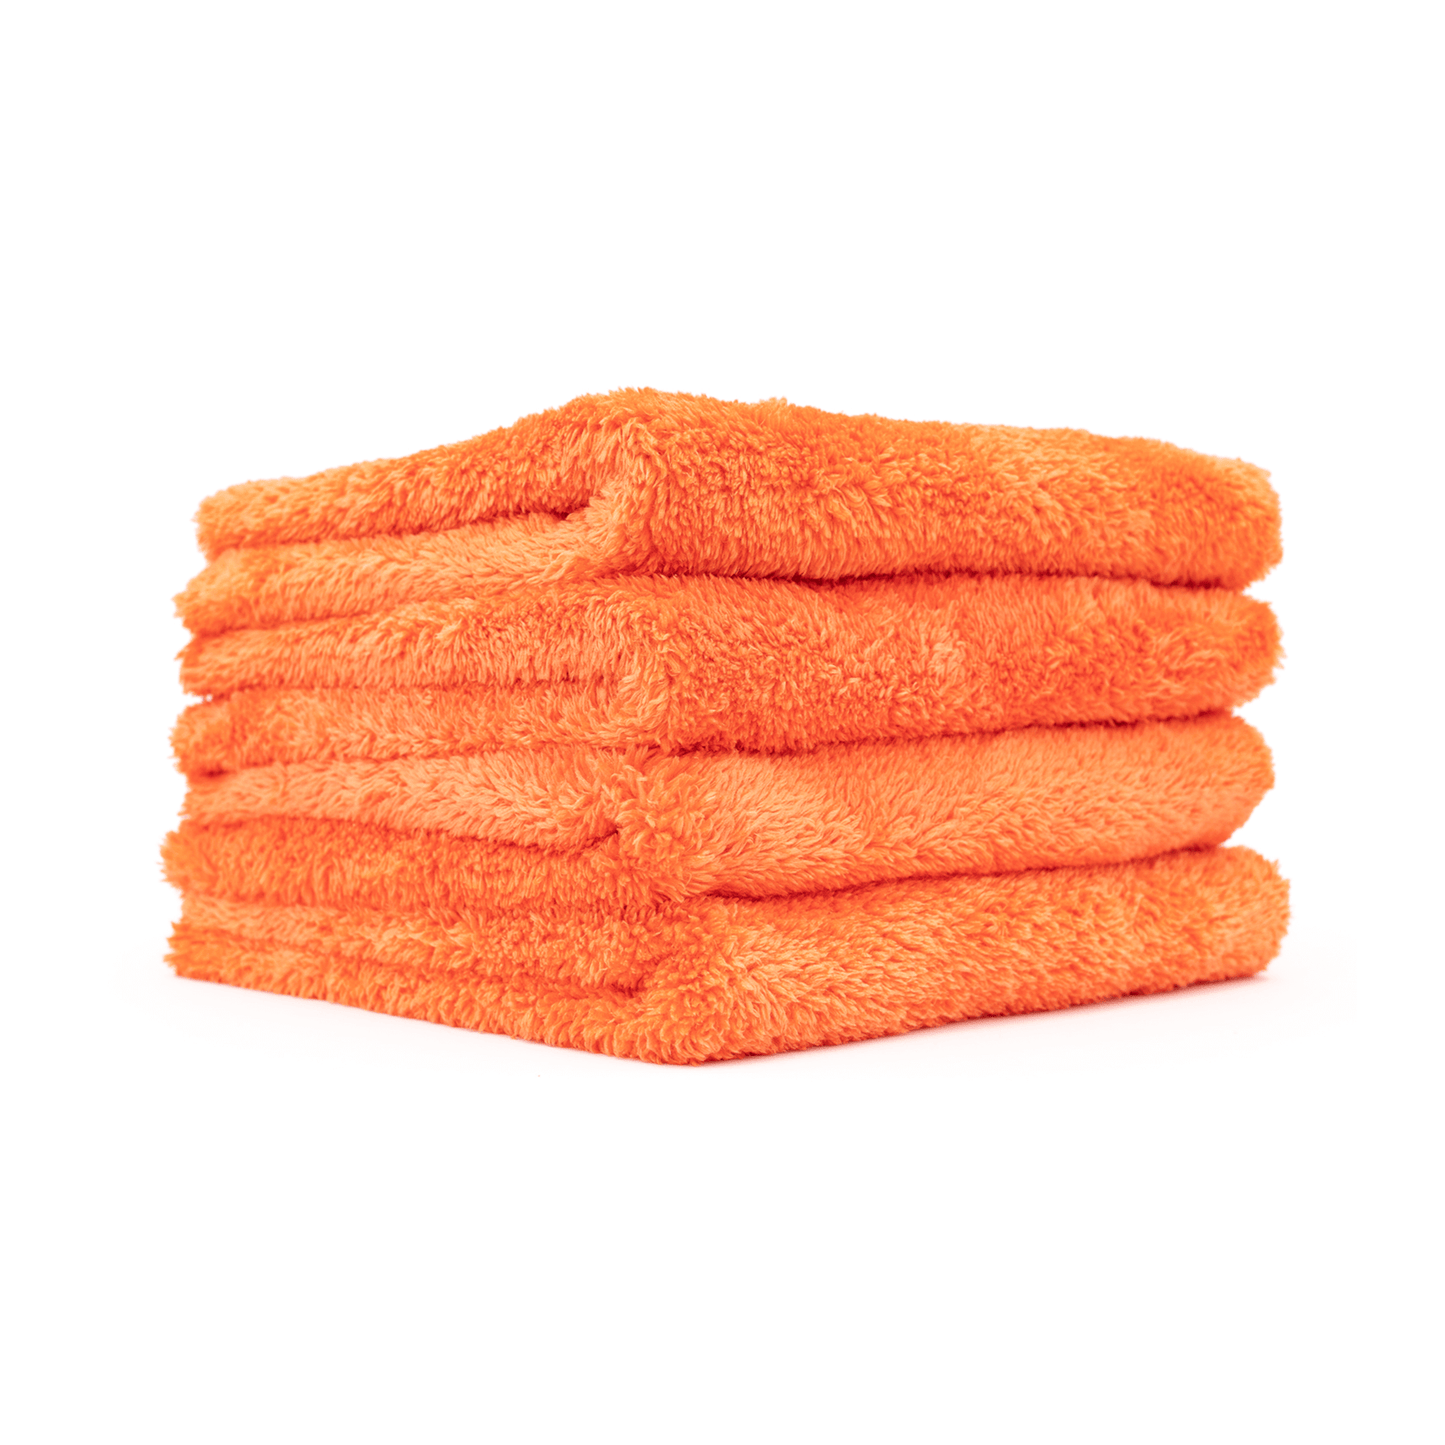 Microfiber Towel Orange